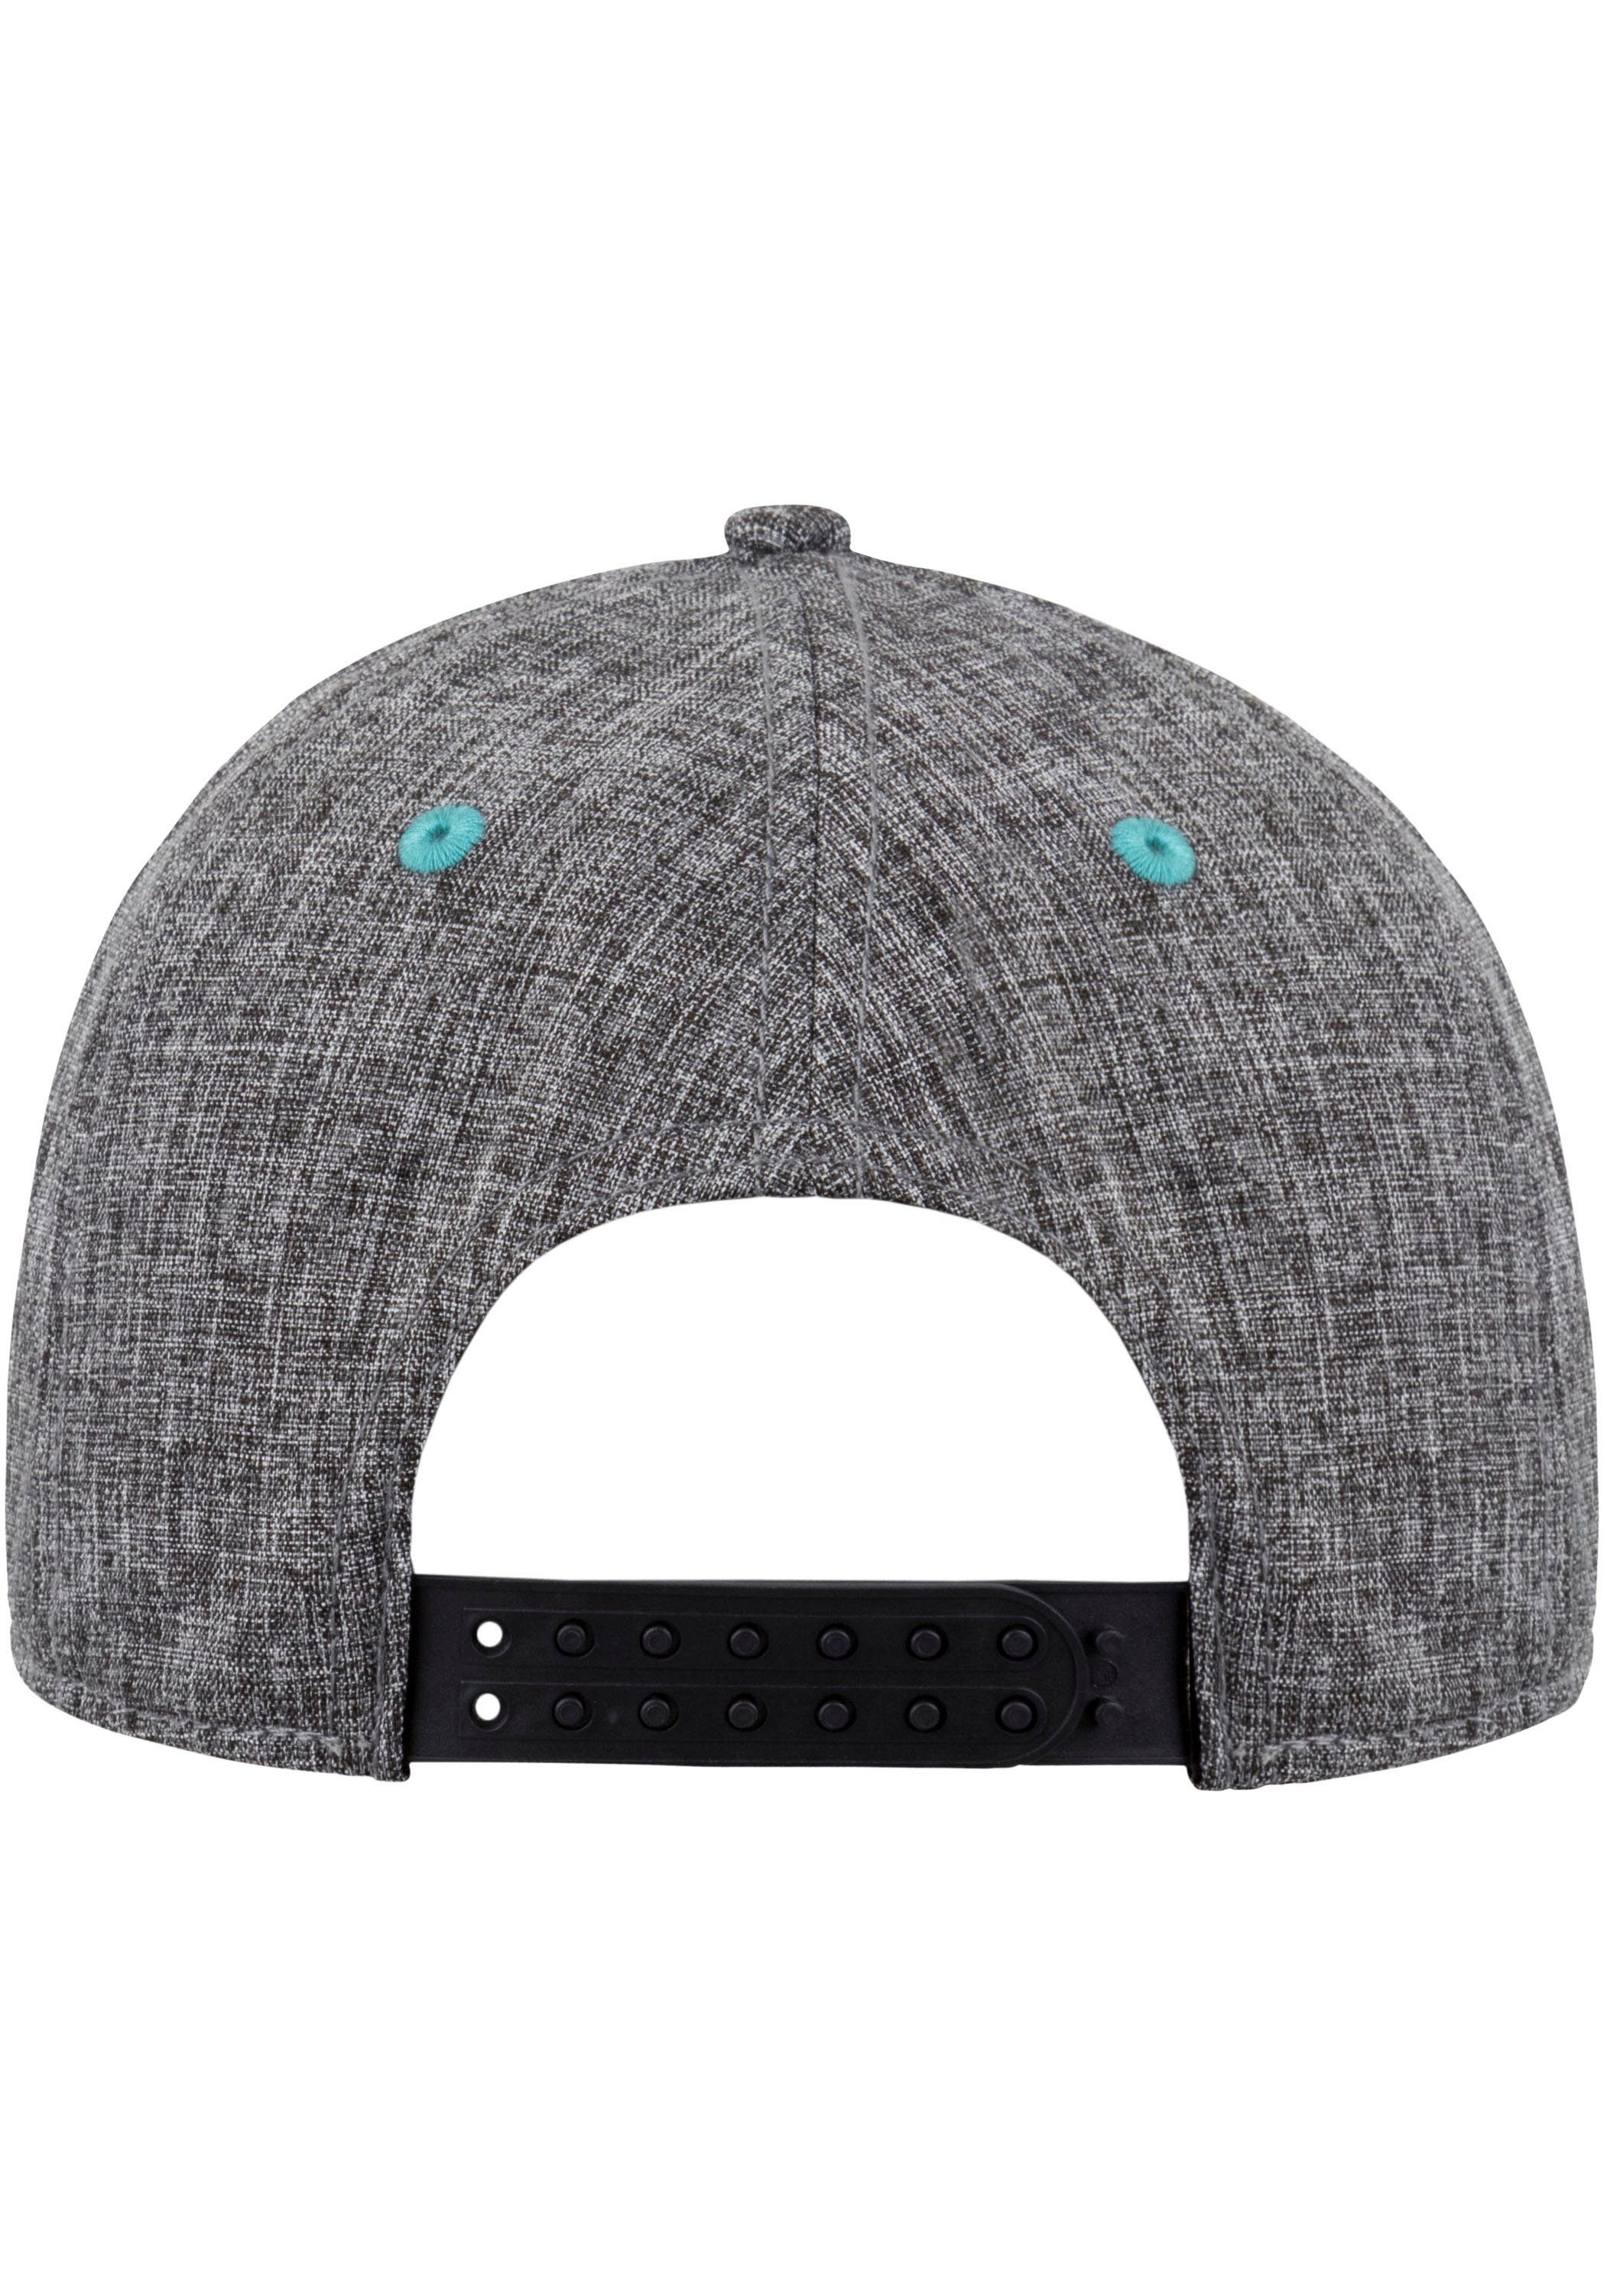 chillouts Baseball Cap Christchurch grau-türkis Hat